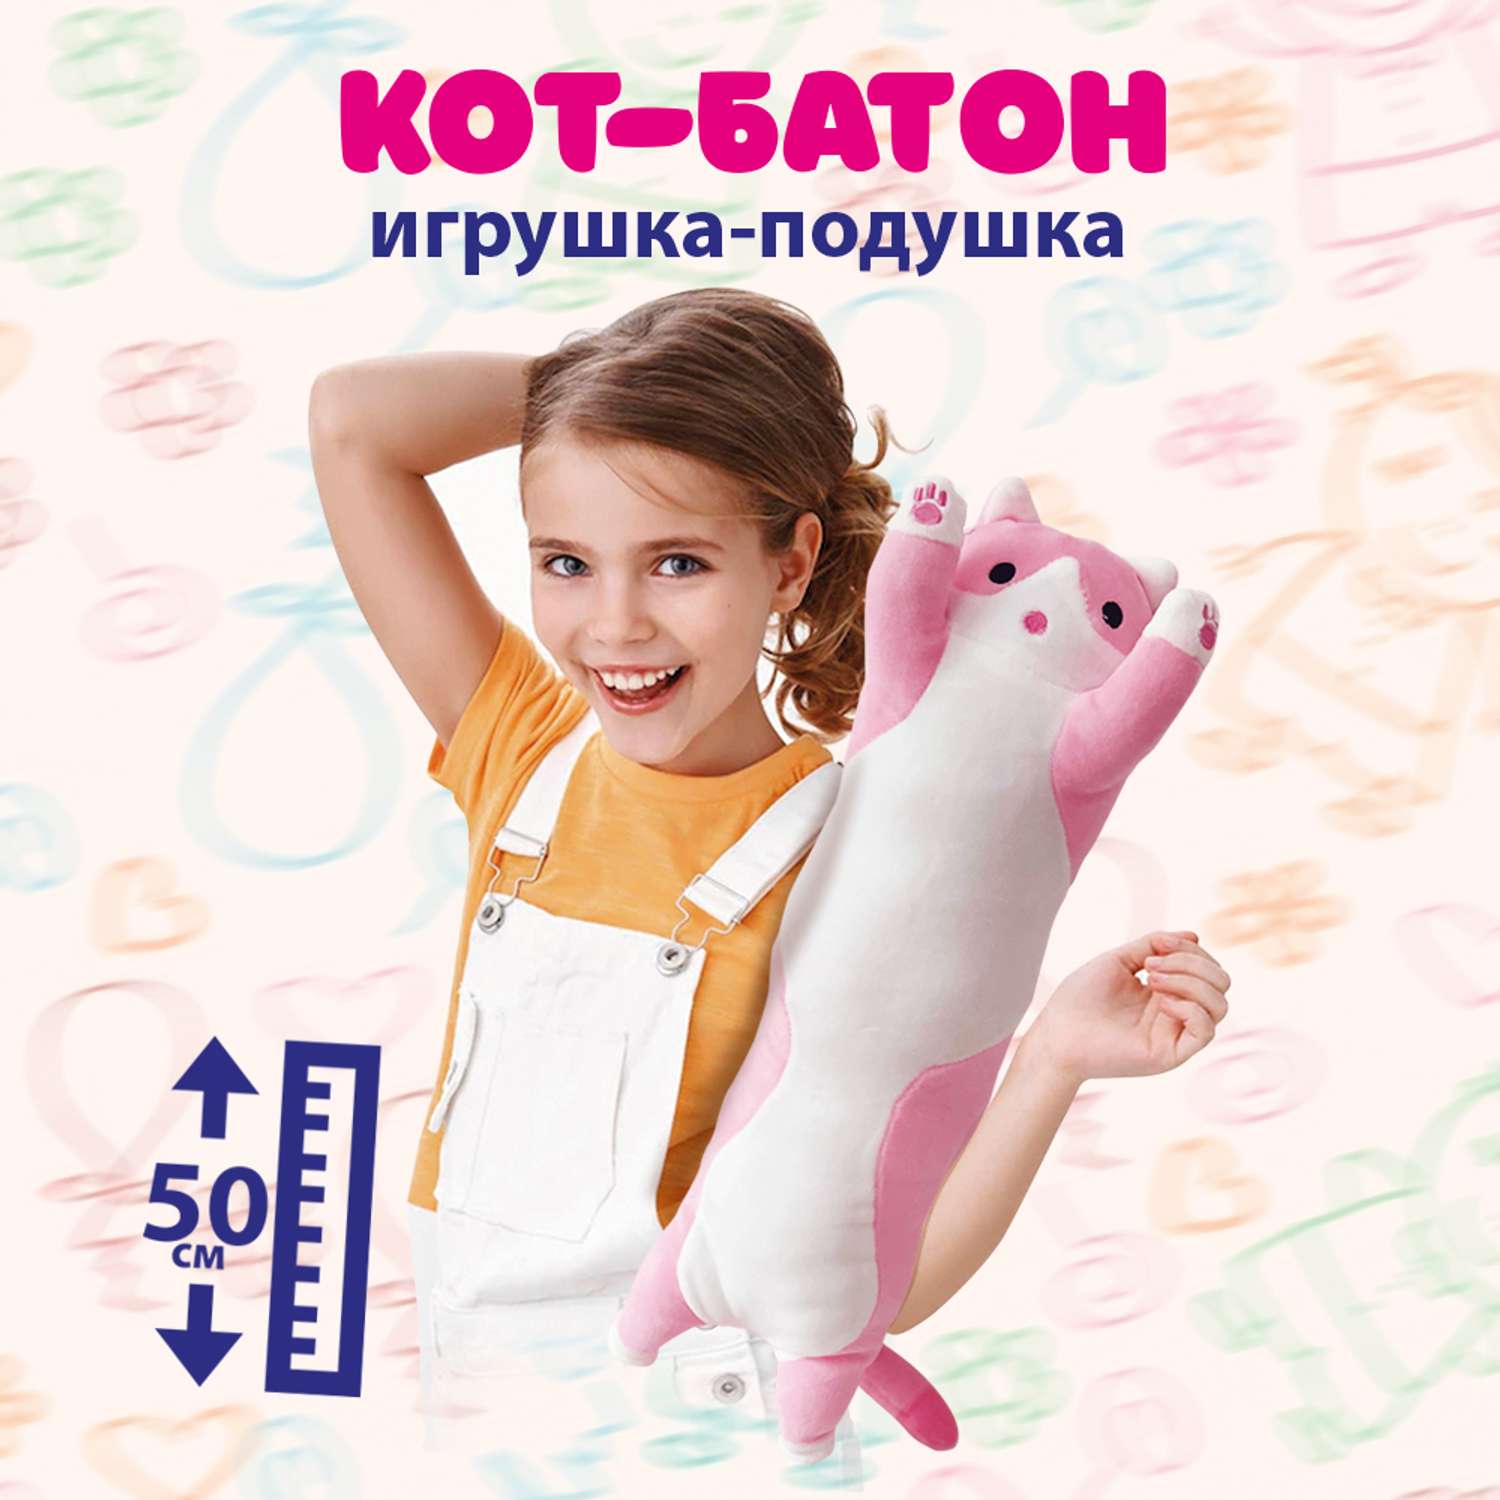 Игрушка-обнимашка Territory подушка кот Батон розовый 50 см - фото 1